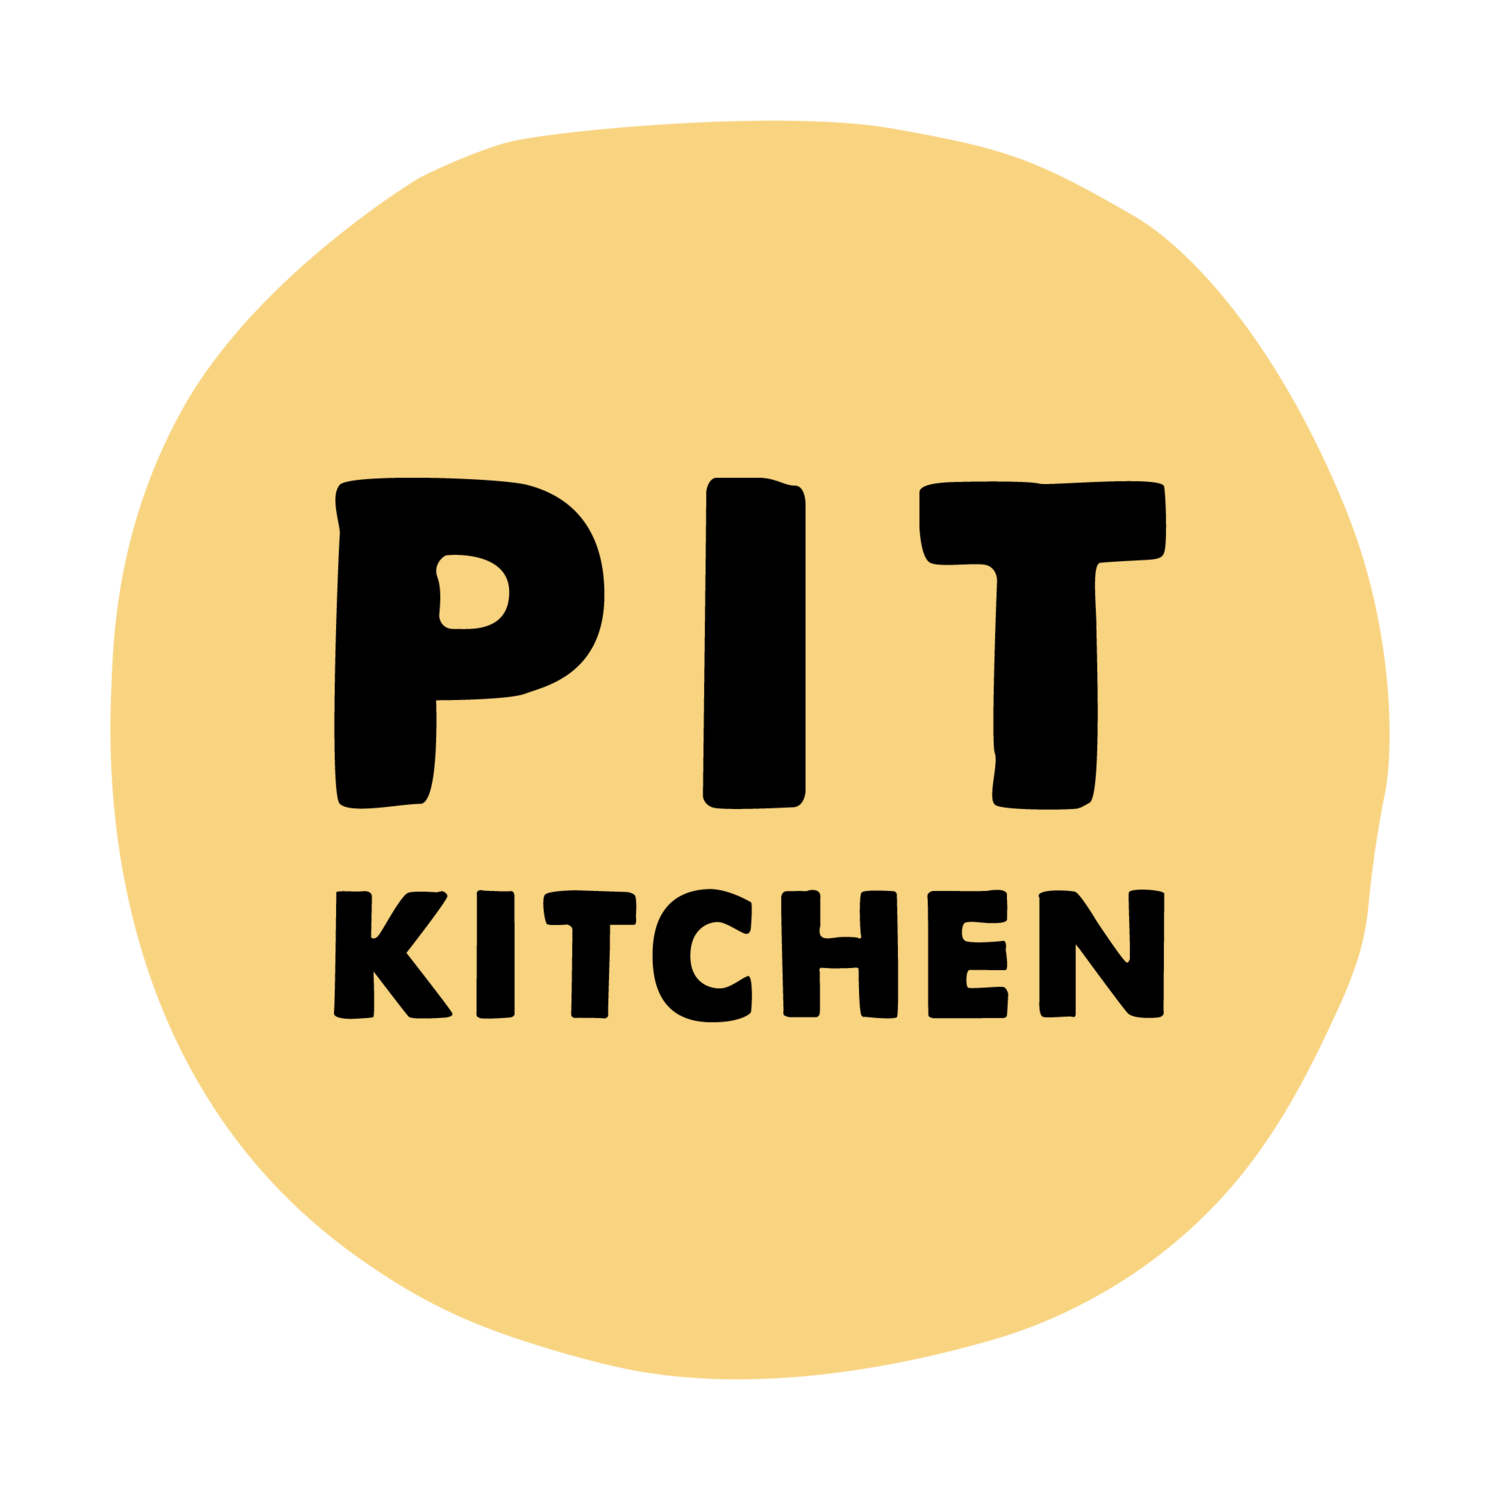 Pit Kitchen